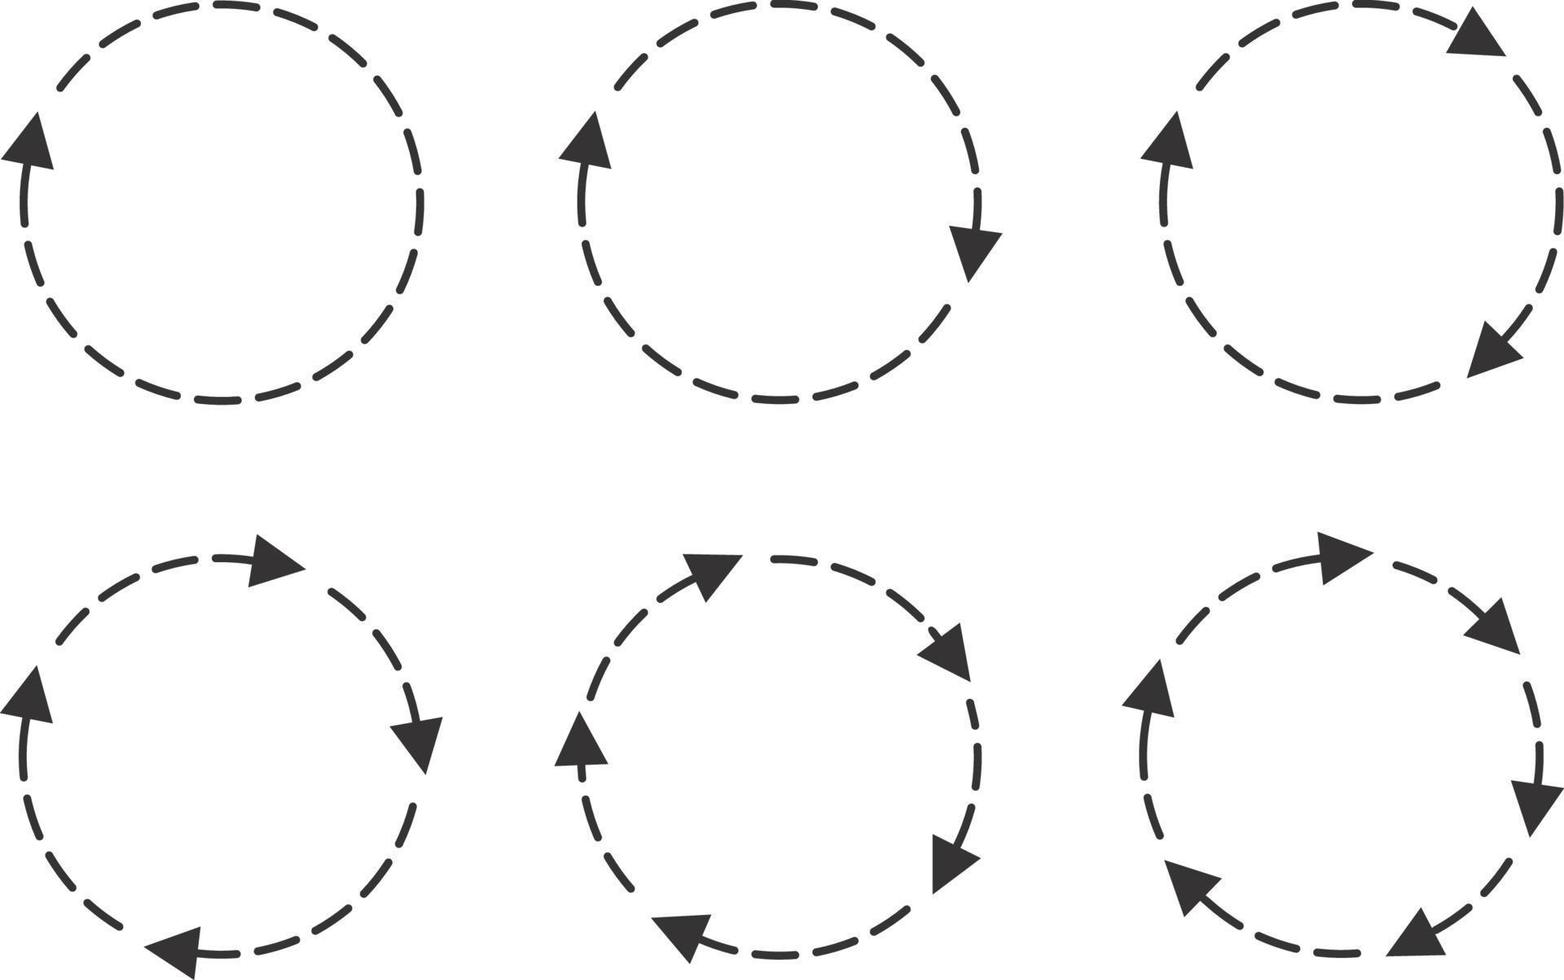 setas do círculo conjunto isolar no fundo branco. vetor